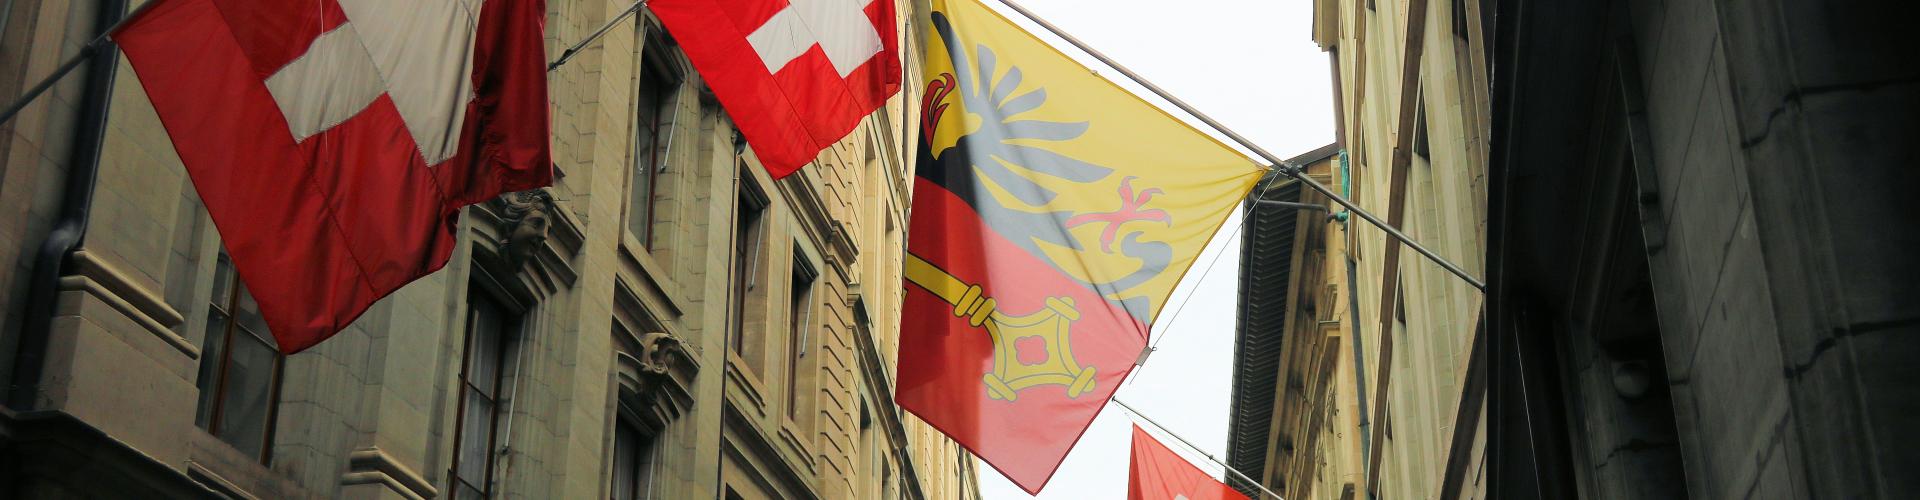 Geneva flags